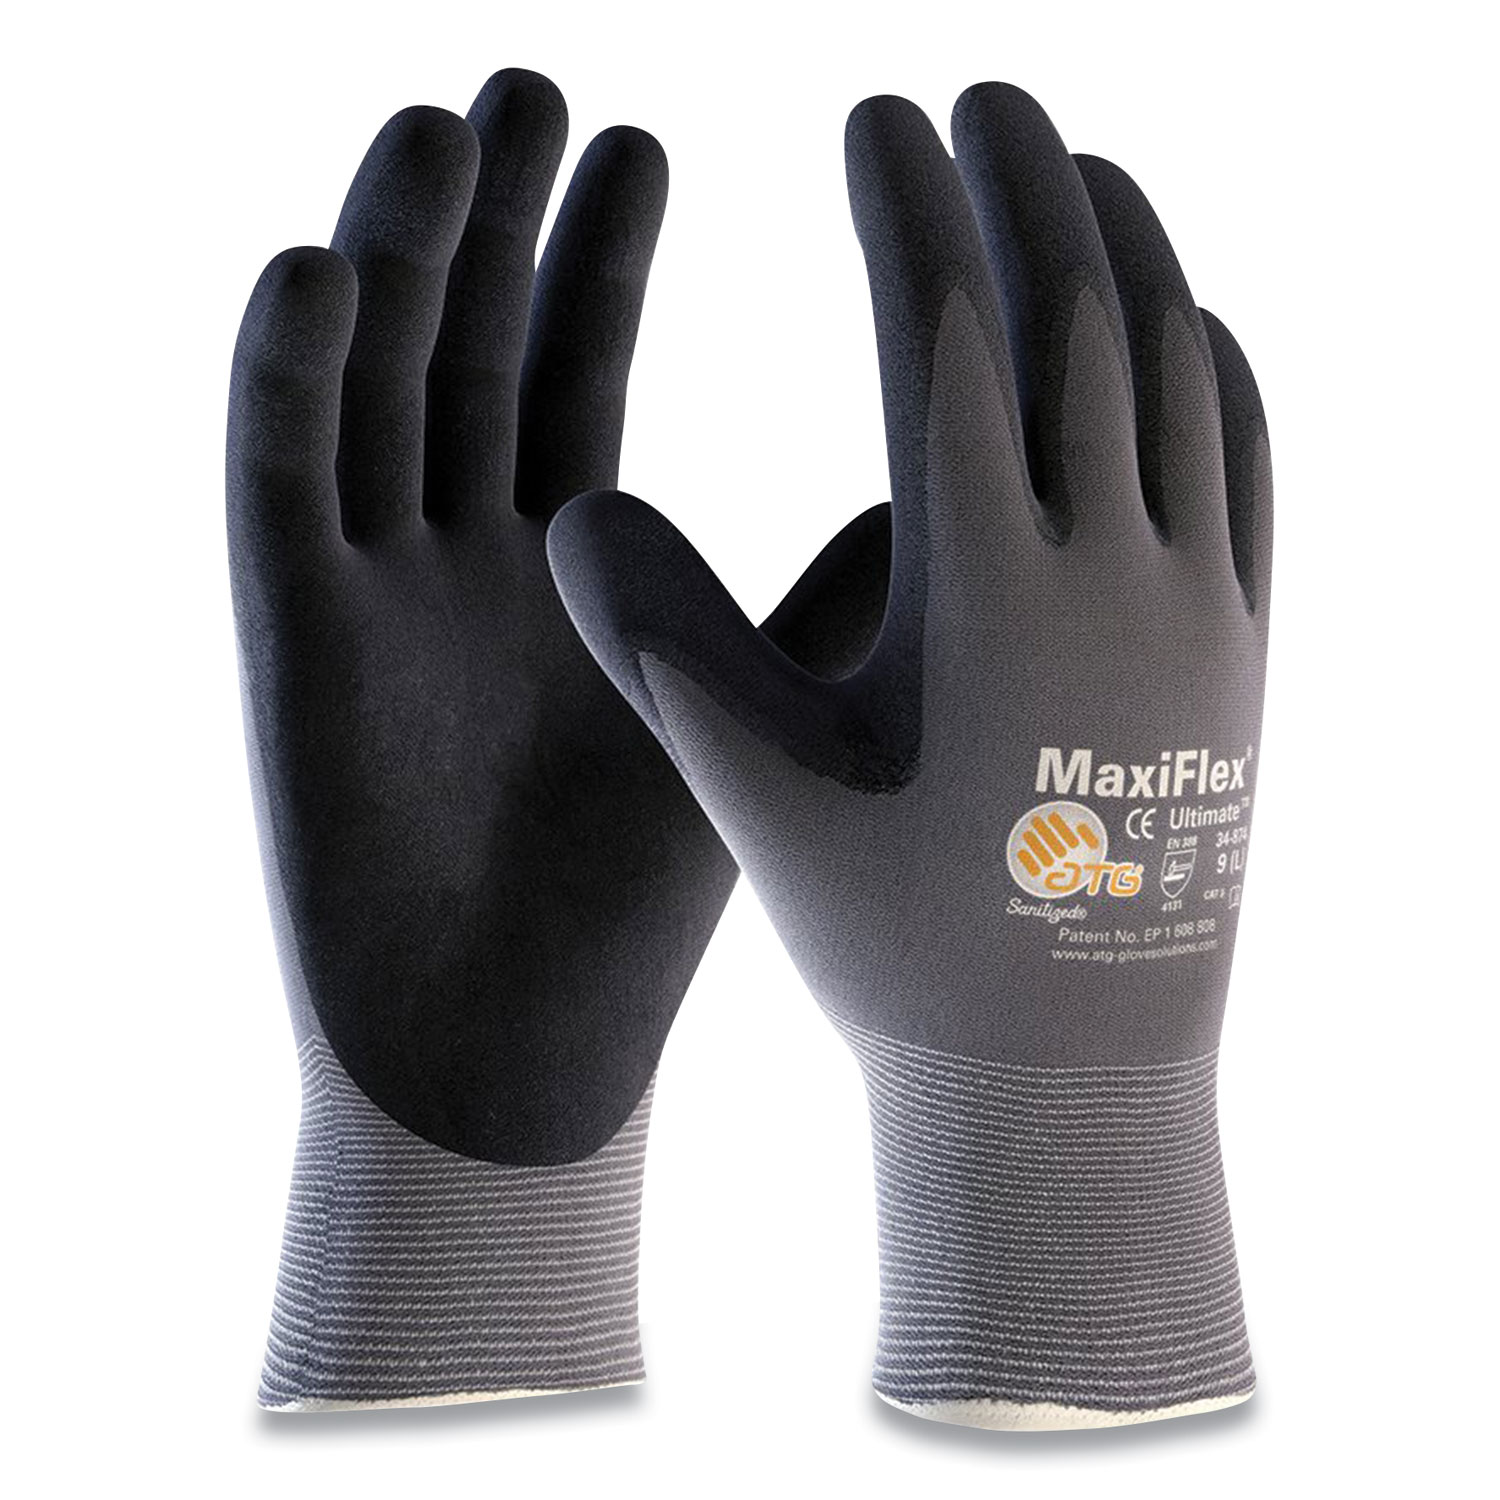  MaxiFlex 34-844/XL Endurance Seamless Knit Nylon Gloves, X-Large, Gray/Black, 12 Pairs (PID179931) 